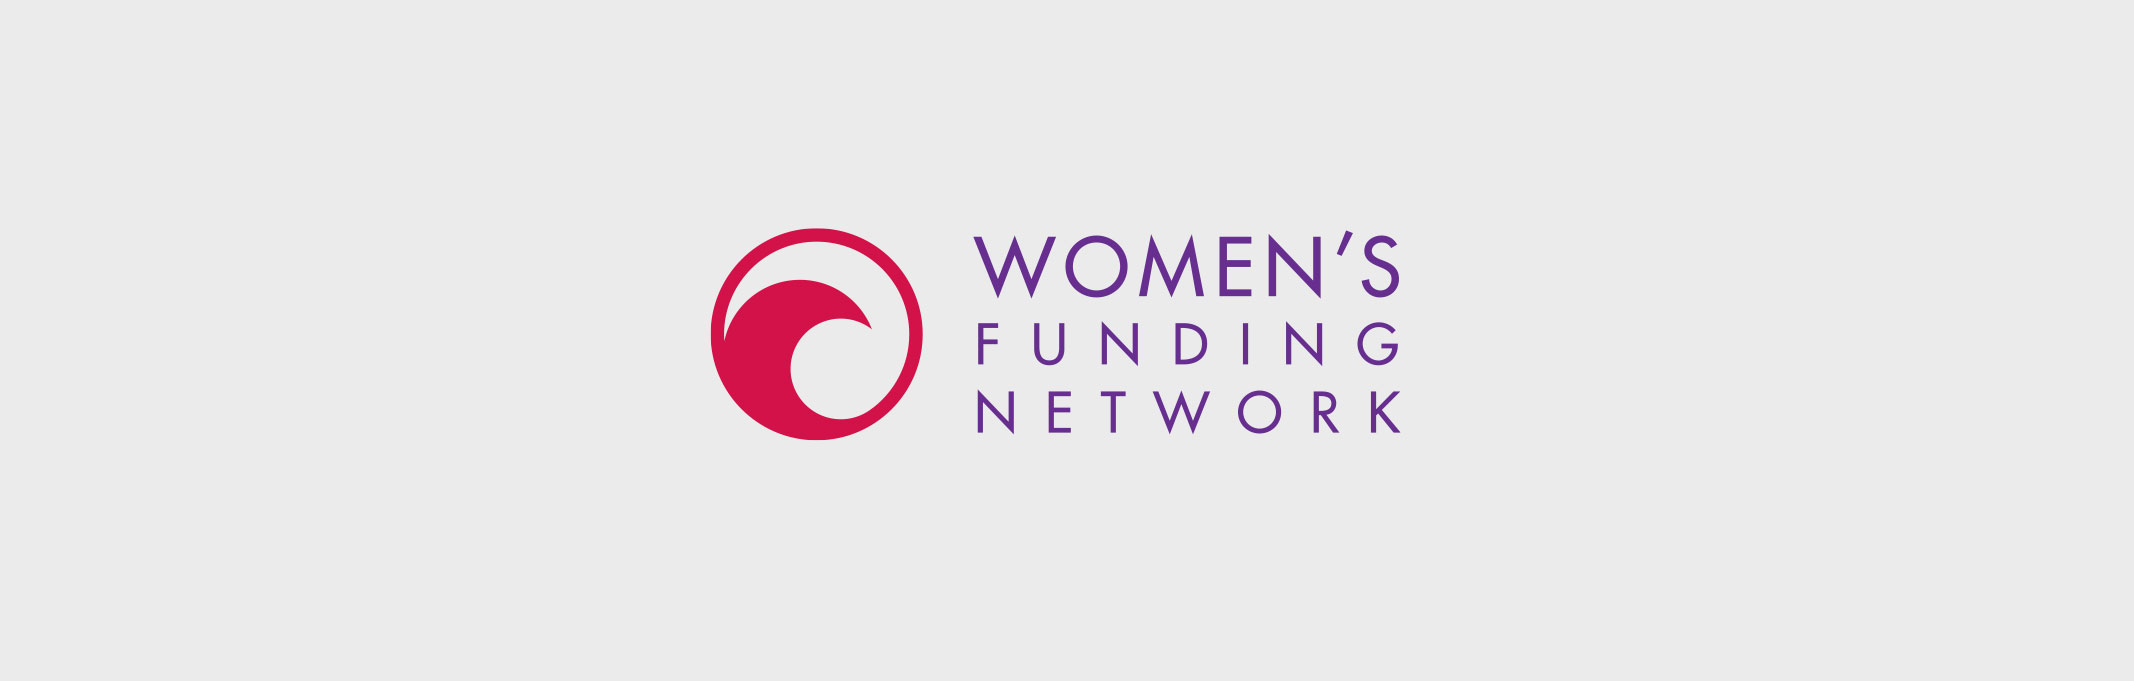 Women's Funding Network